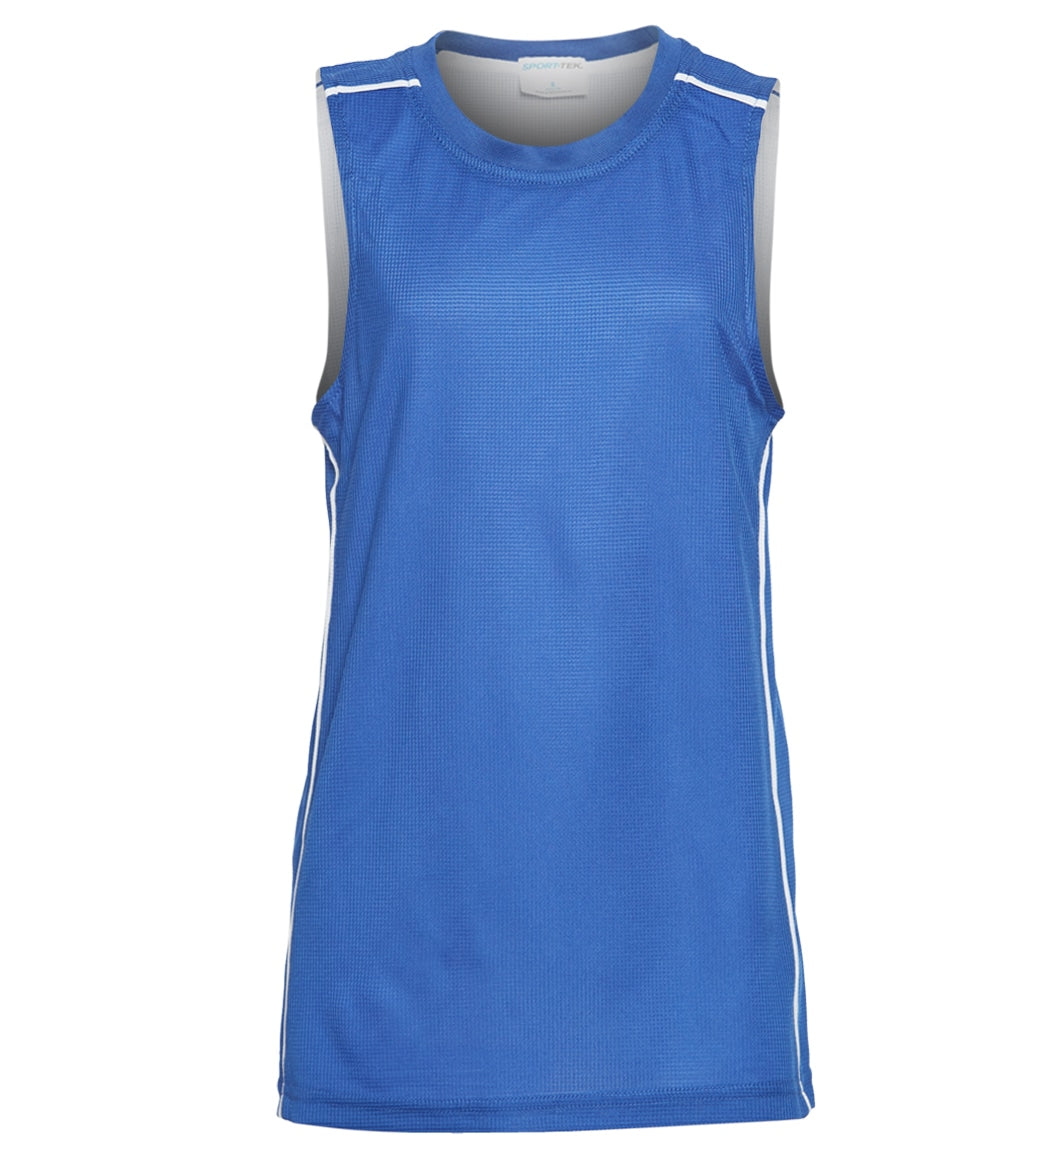 Boys' Posicharge Mesh Reversible Sleeveless Tee Shirt - True Royal Large Polyester - Swimoutlet.com